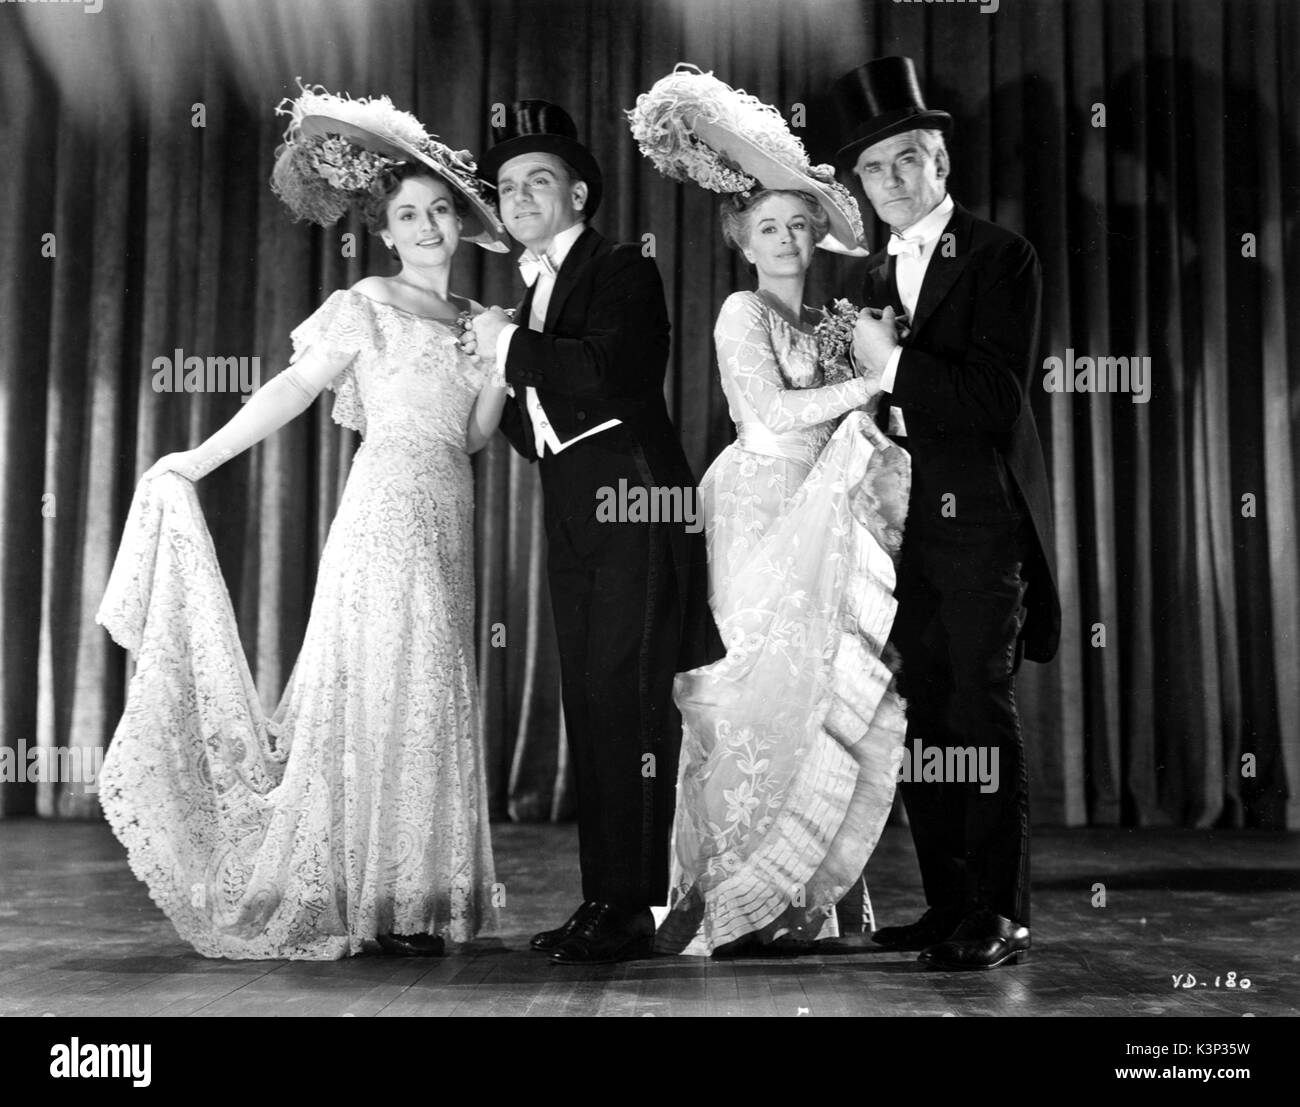 YANKEE DOODLE DANDY [US 1942] JOAN LESLIE, JAMES CAGNEY, ROSEMARY DECAMP, WALTER HUSTON     Date: 1942 Stock Photo